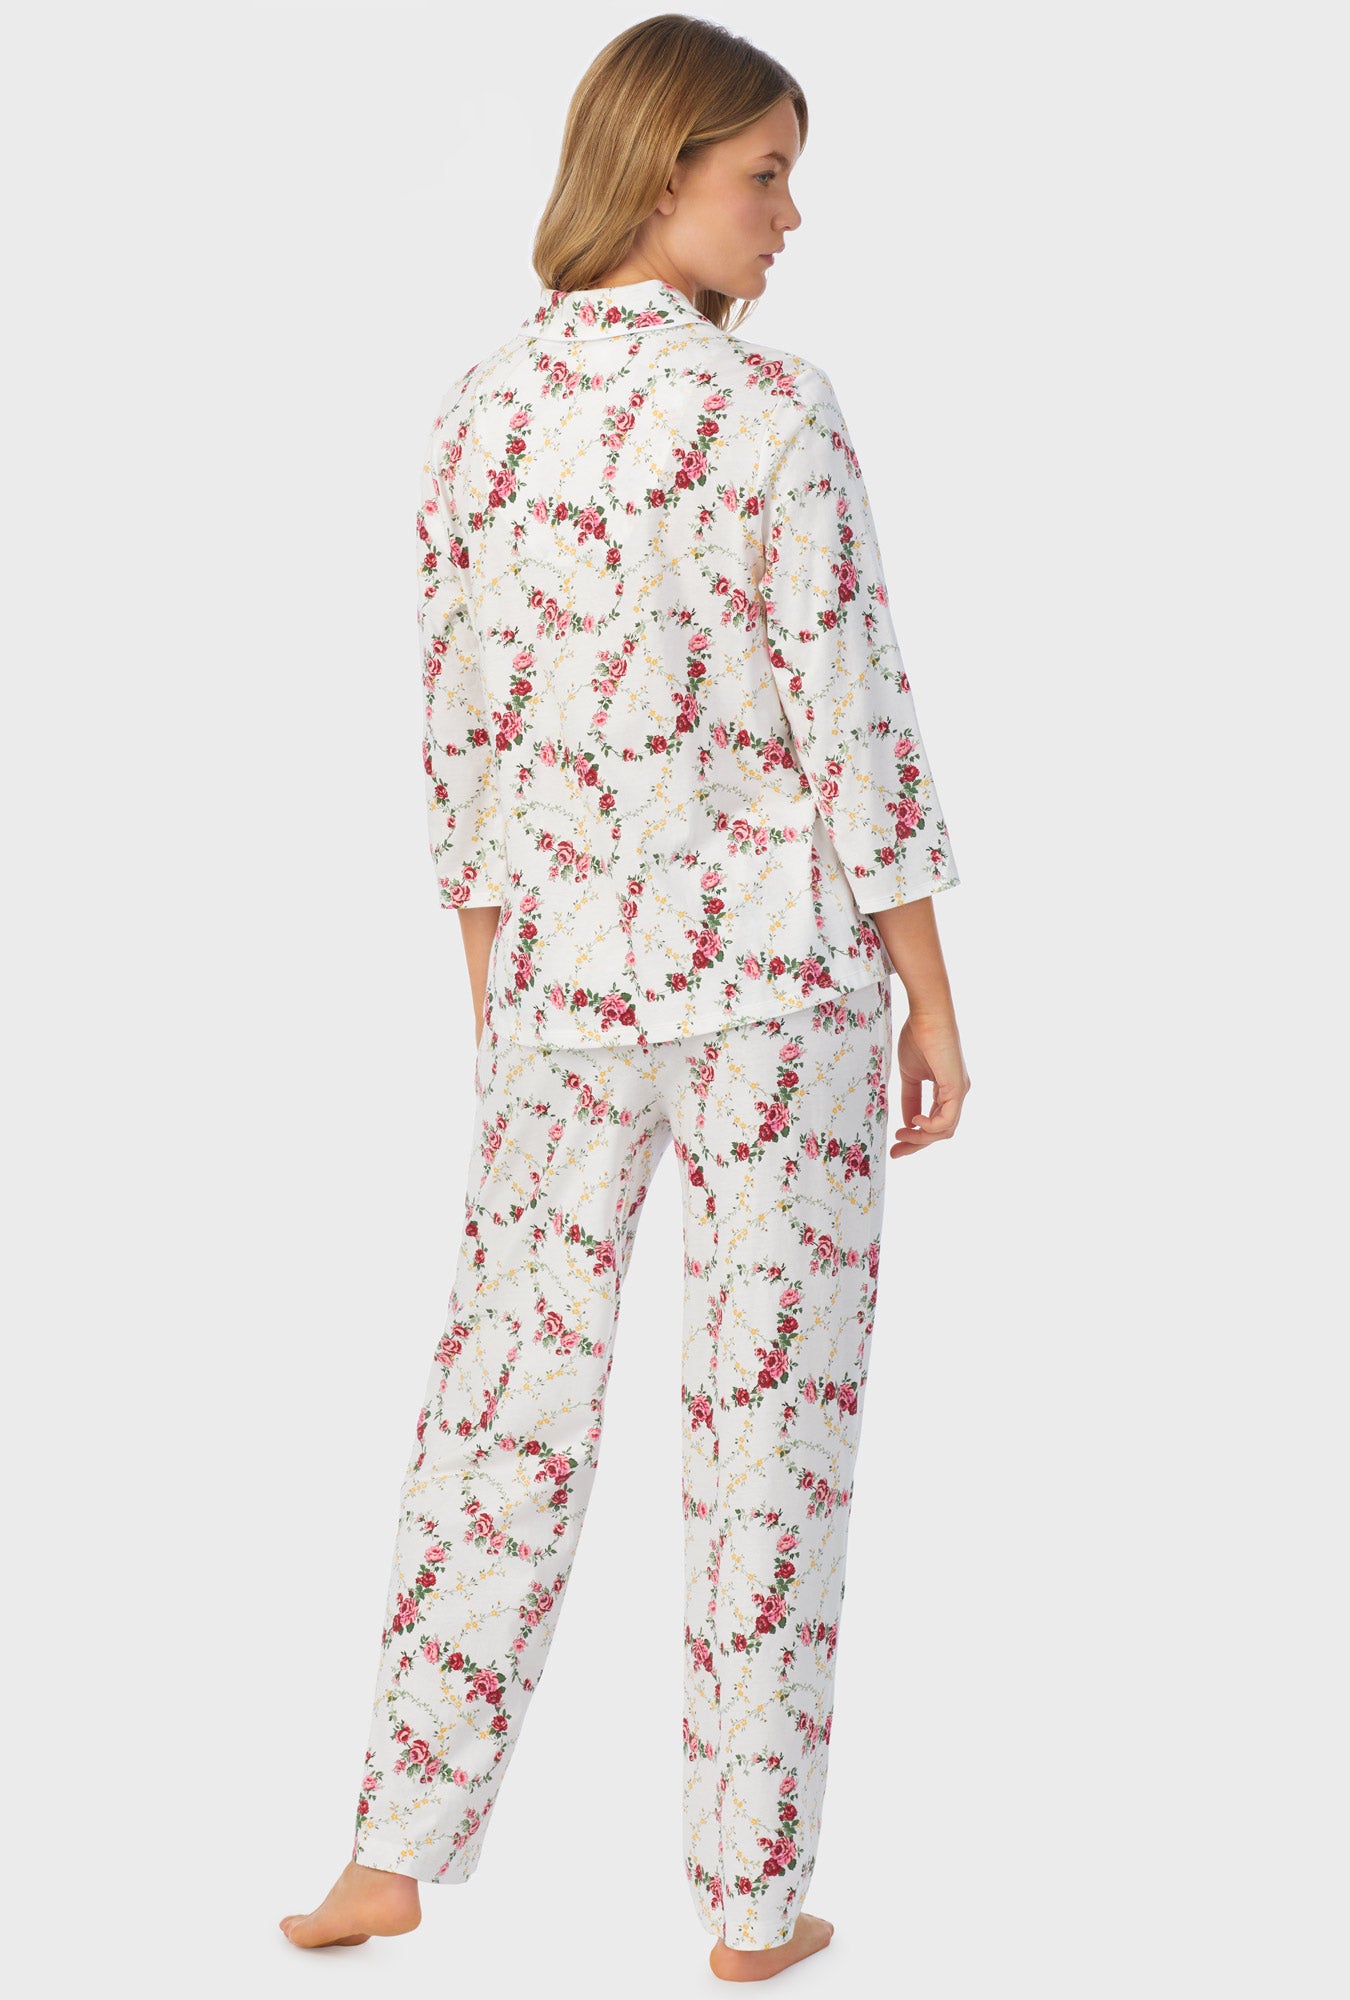 A lady wearing long sleeve long pajama set with rose vine print.